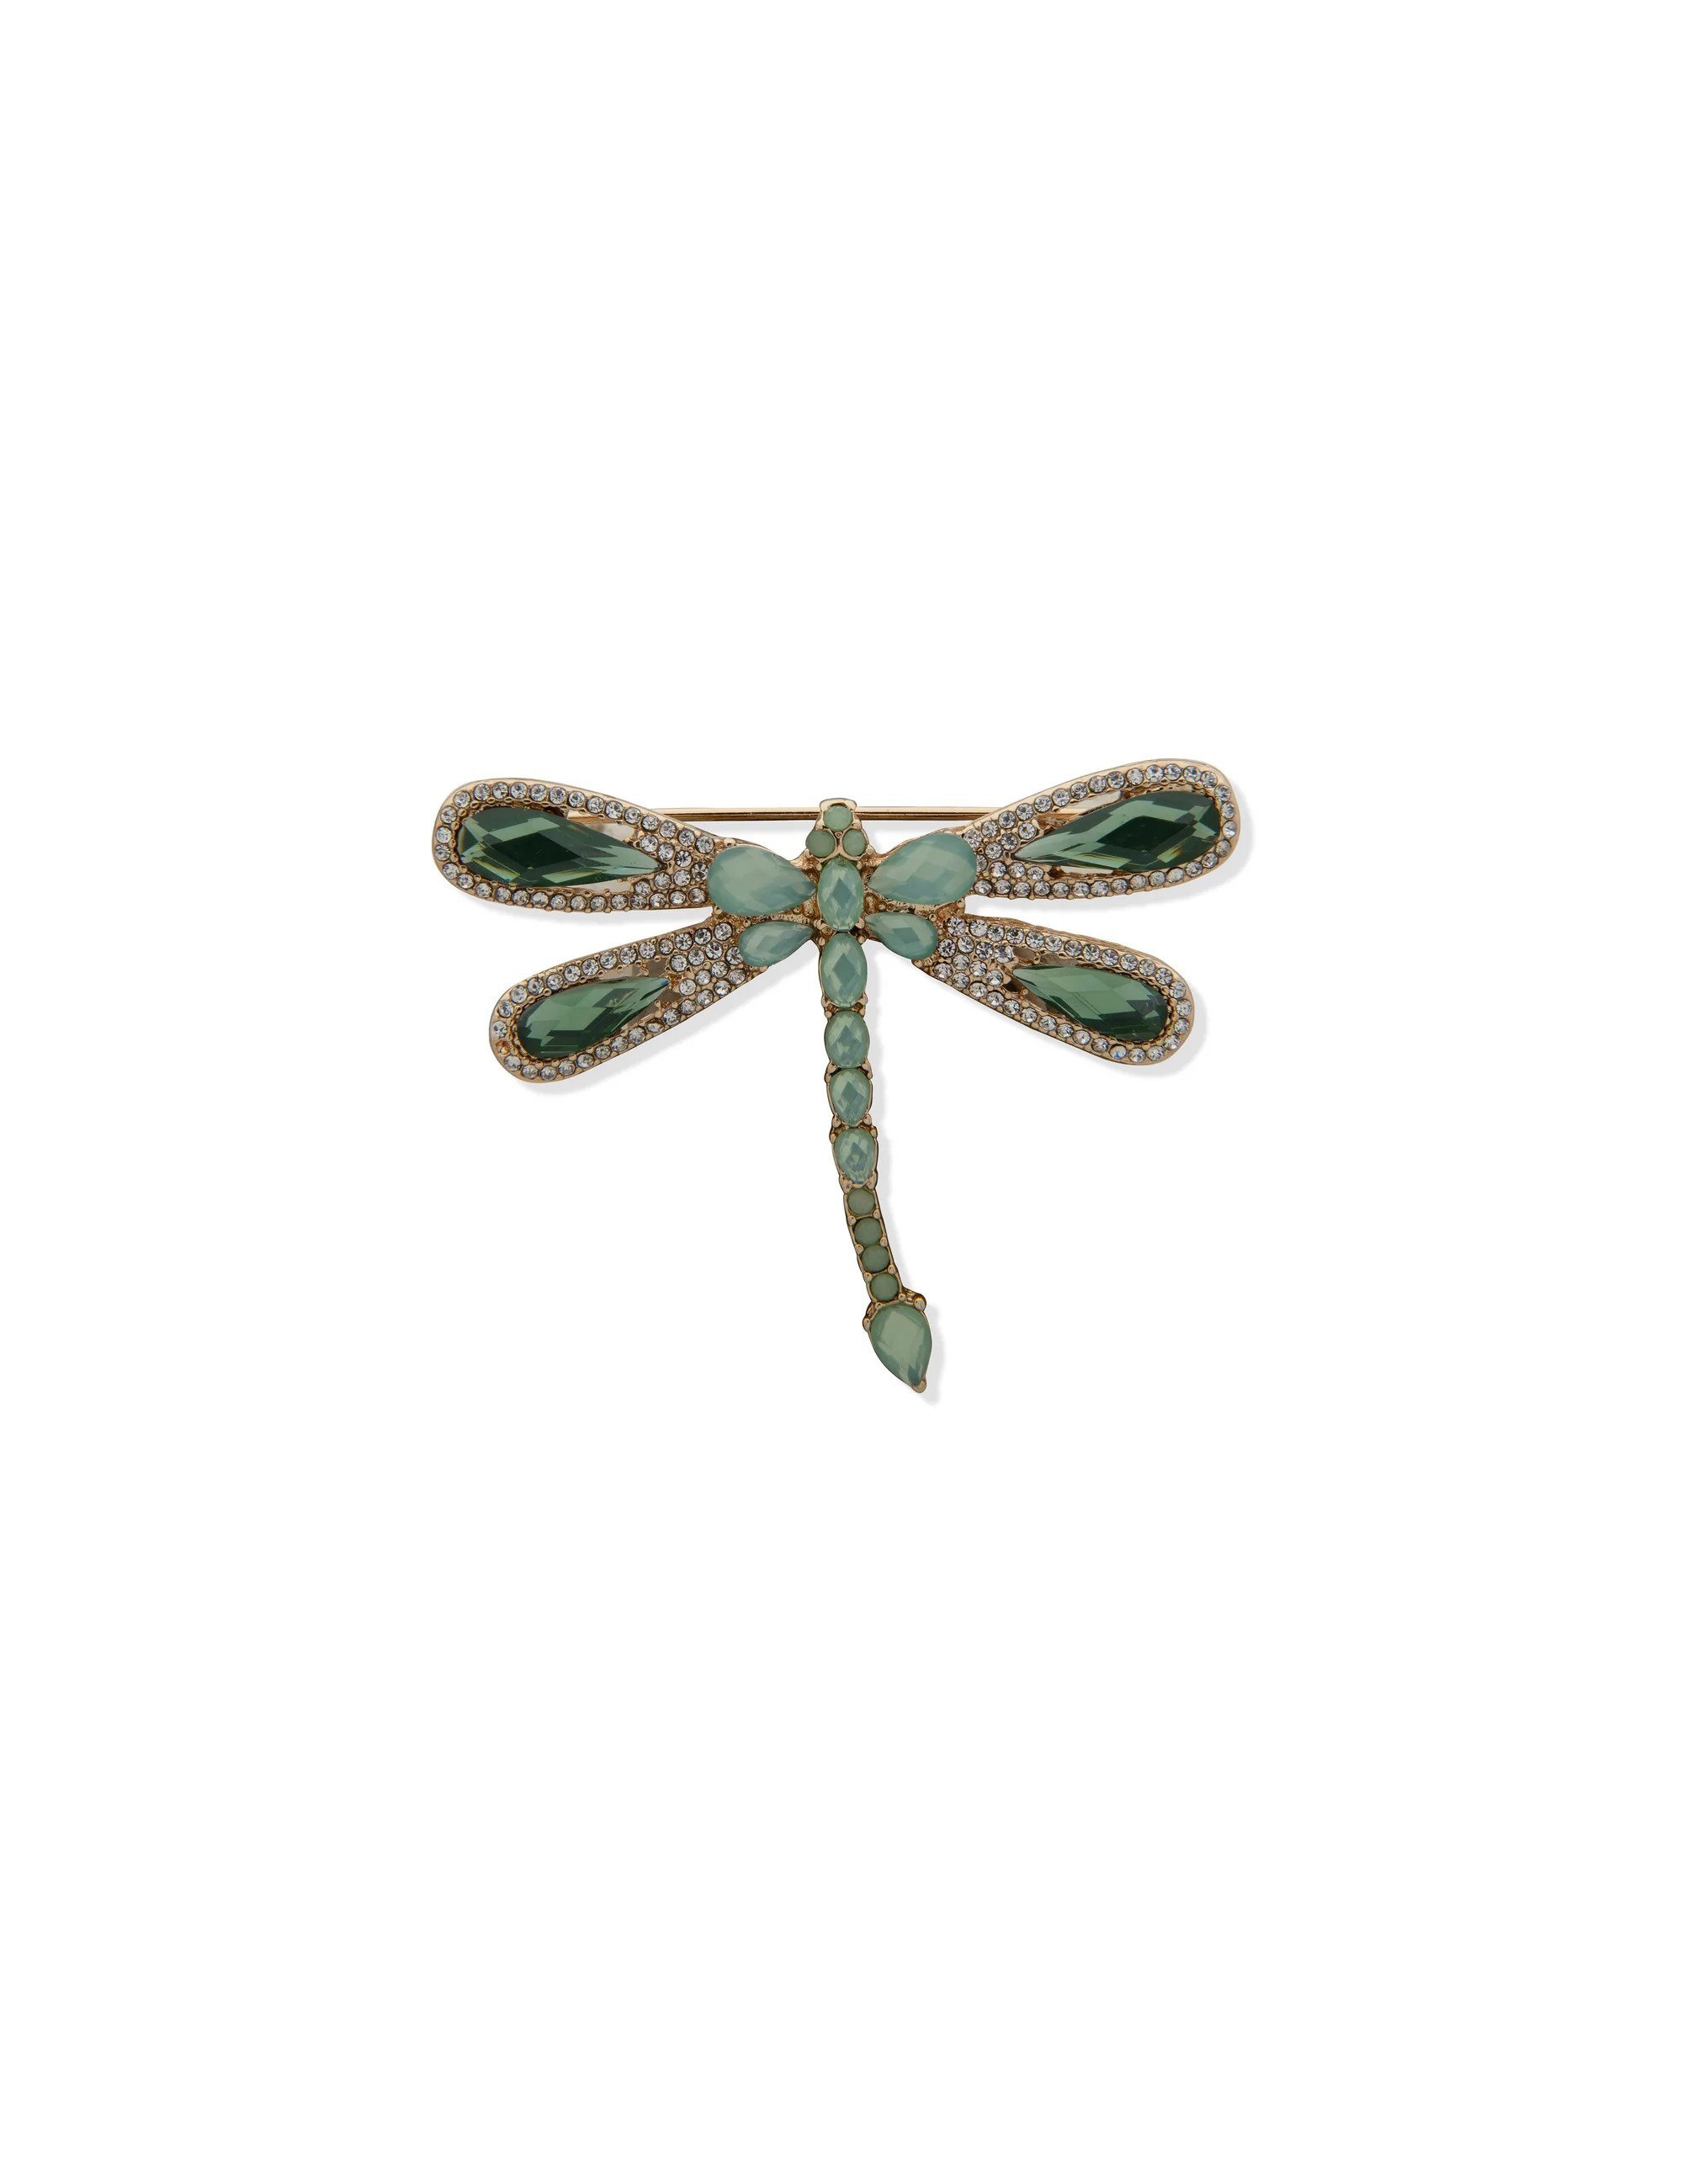 Dragonfly Brooch in Gift Box_1,650.00 to 1,320.00.jpg